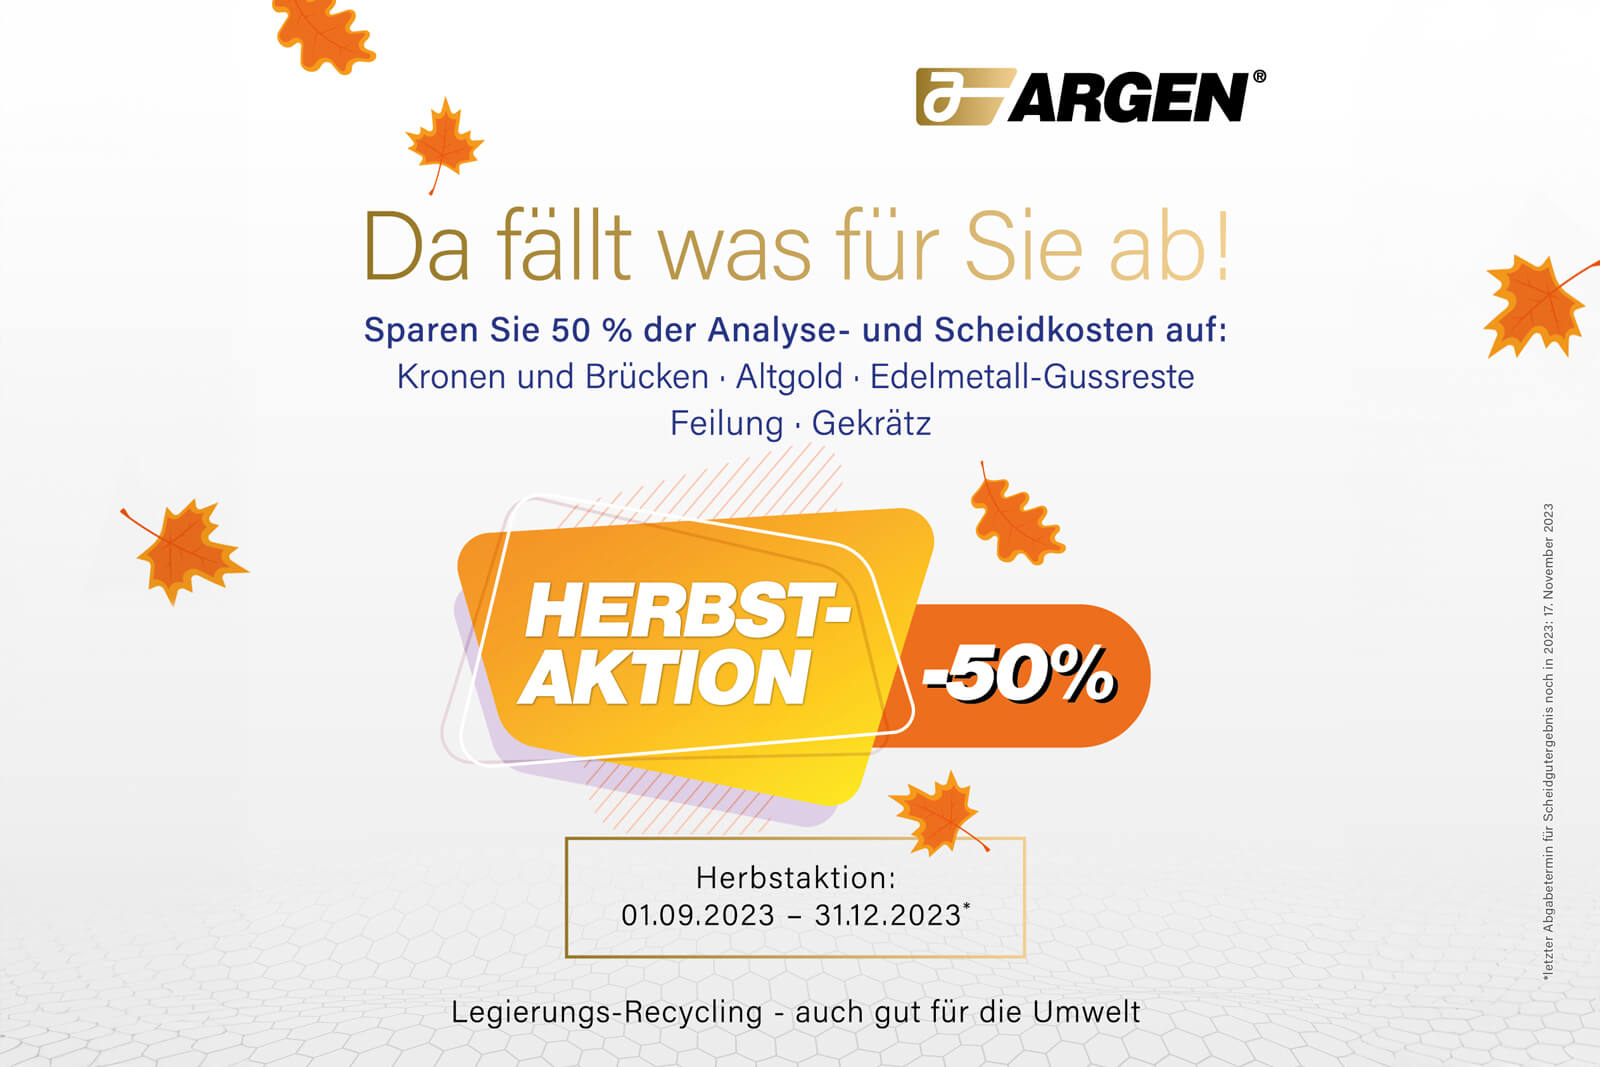 Argen Dental GmbH - News - Herbstaktion 50% Rabatt